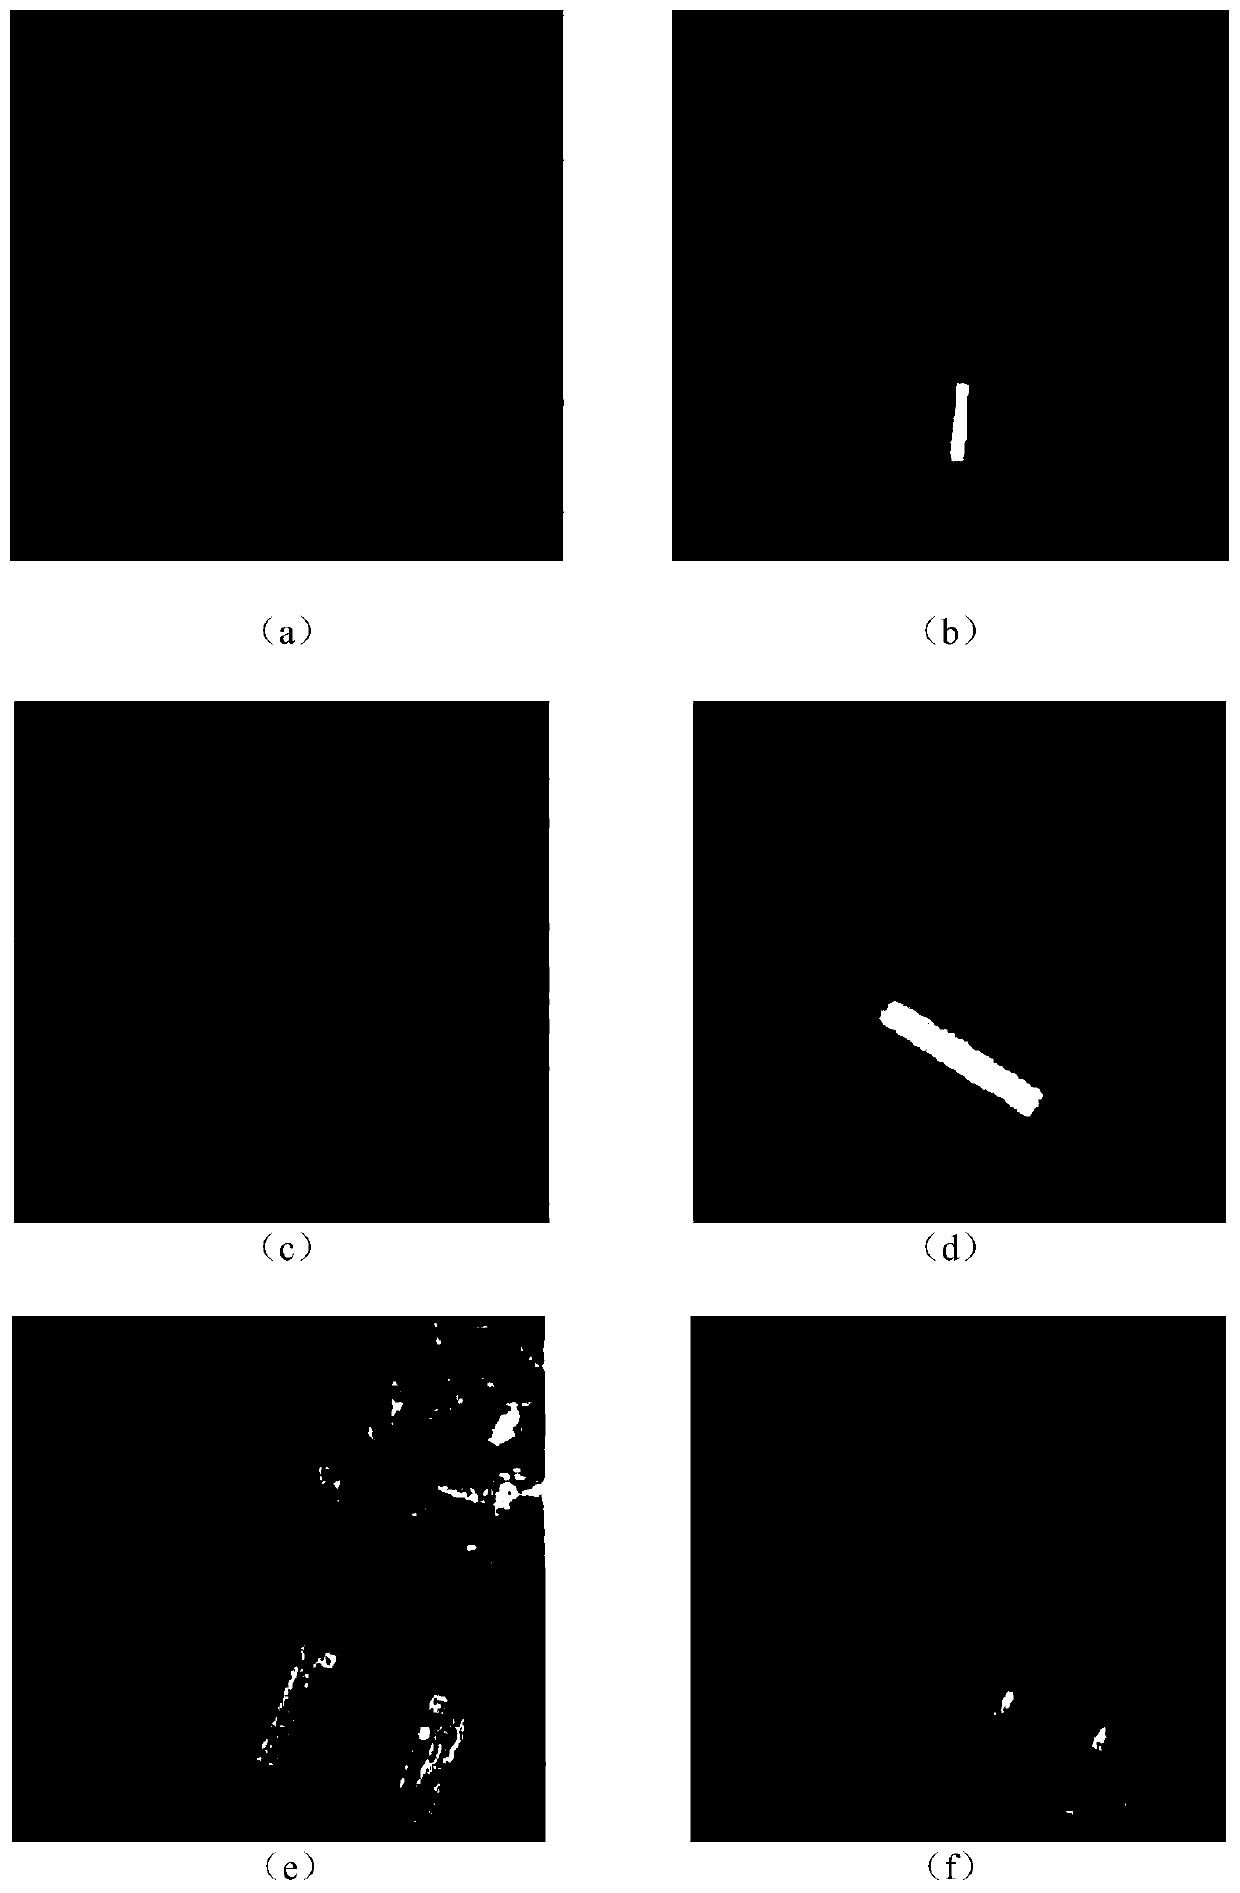 Satellite image segmentation method based on residual network and U-Net segmentation network